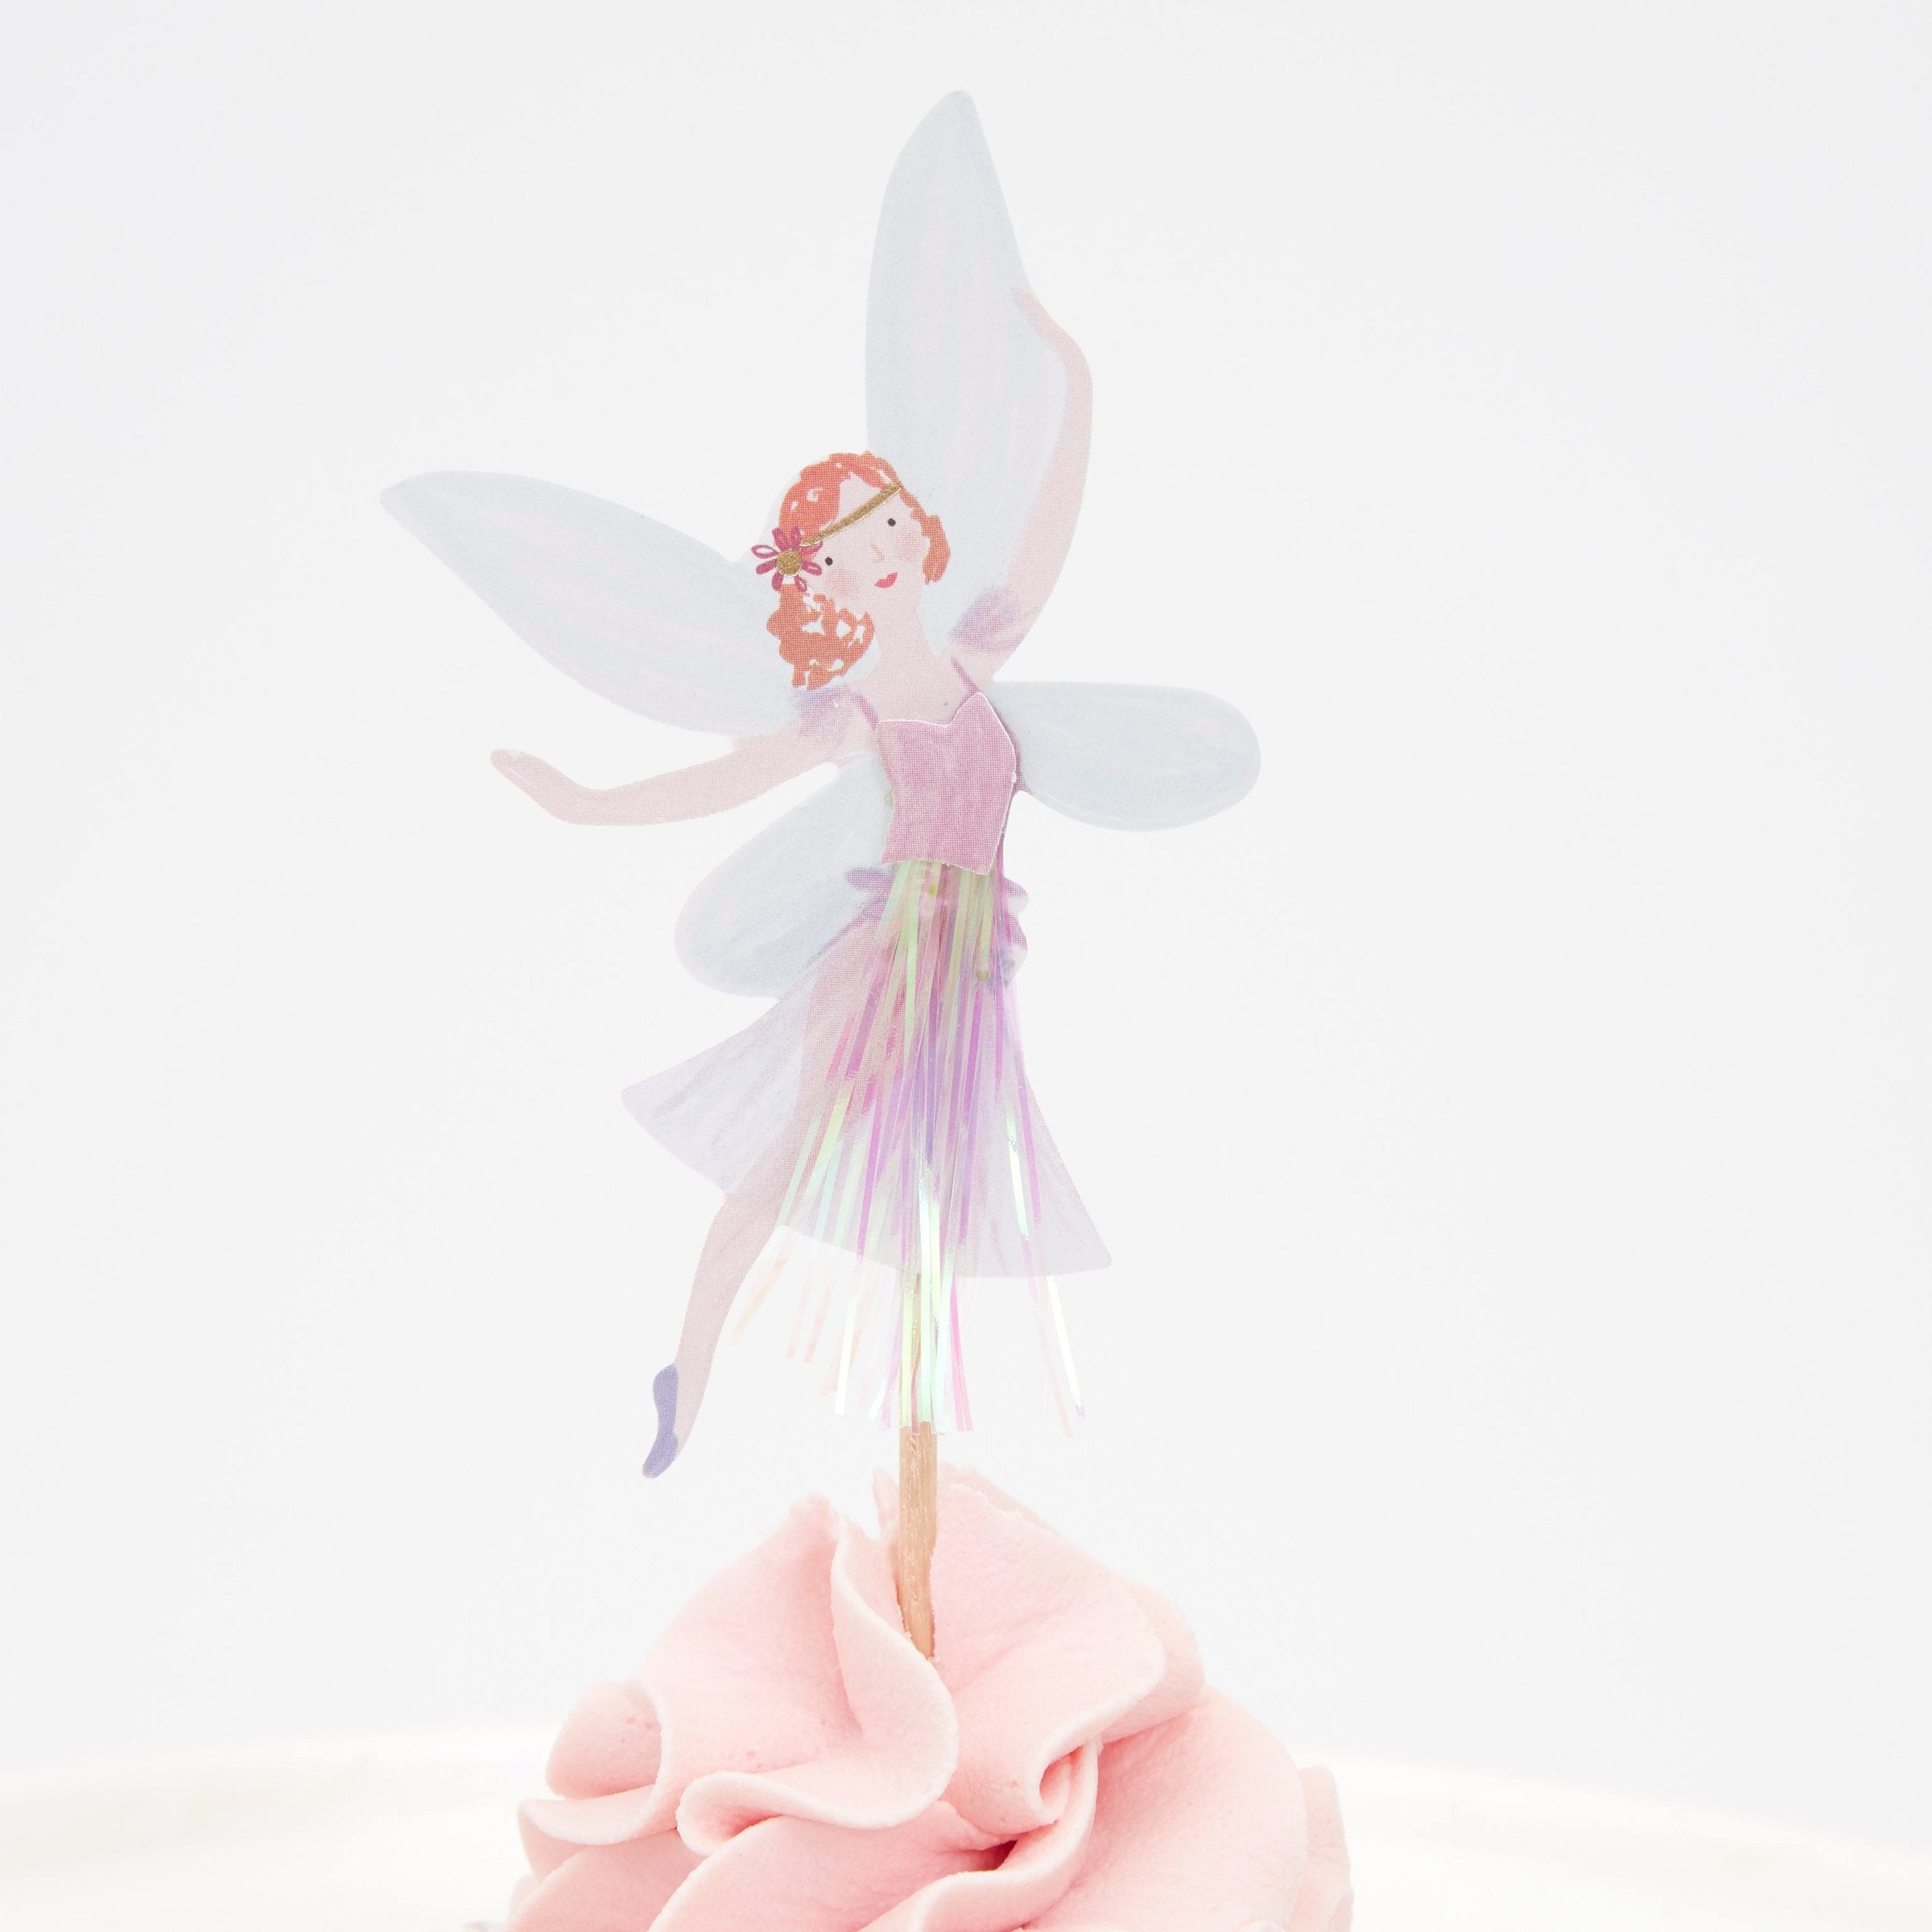 Fairy Cupcake Kit